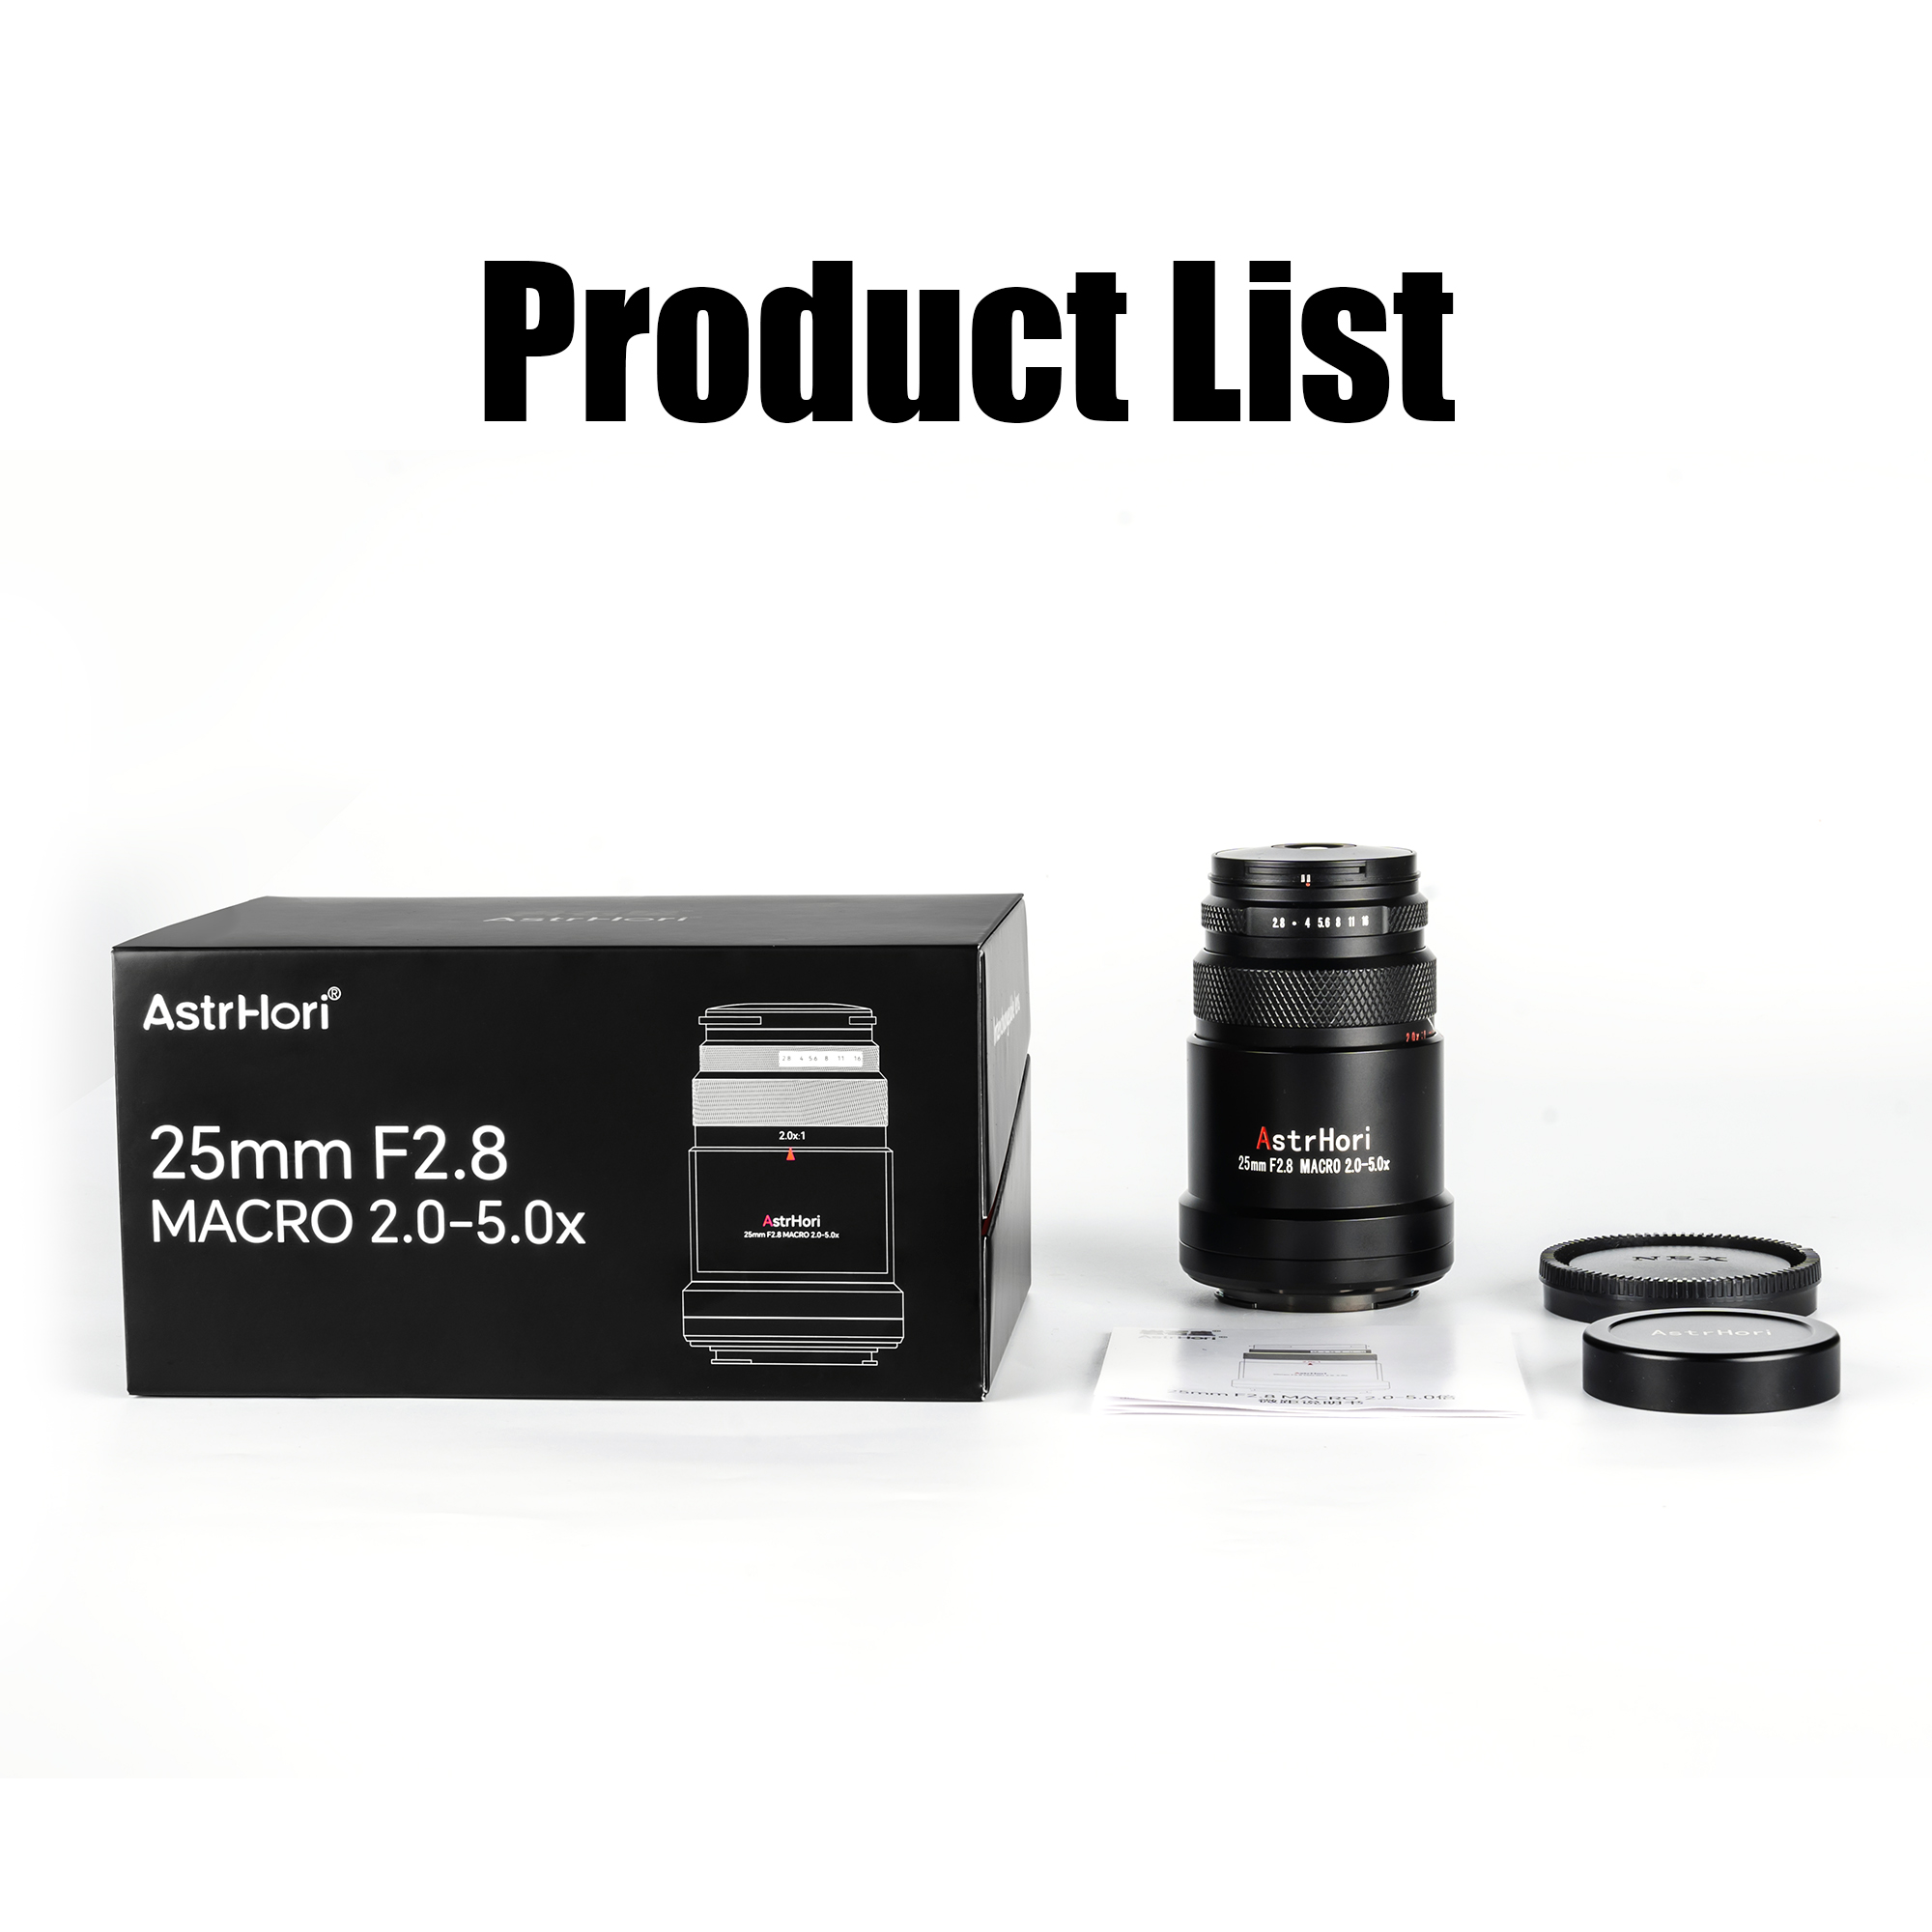 25mmF2.8 List - AstrHori to launch RF 25mm f/2.8 2x-5x Macro Lens for $249